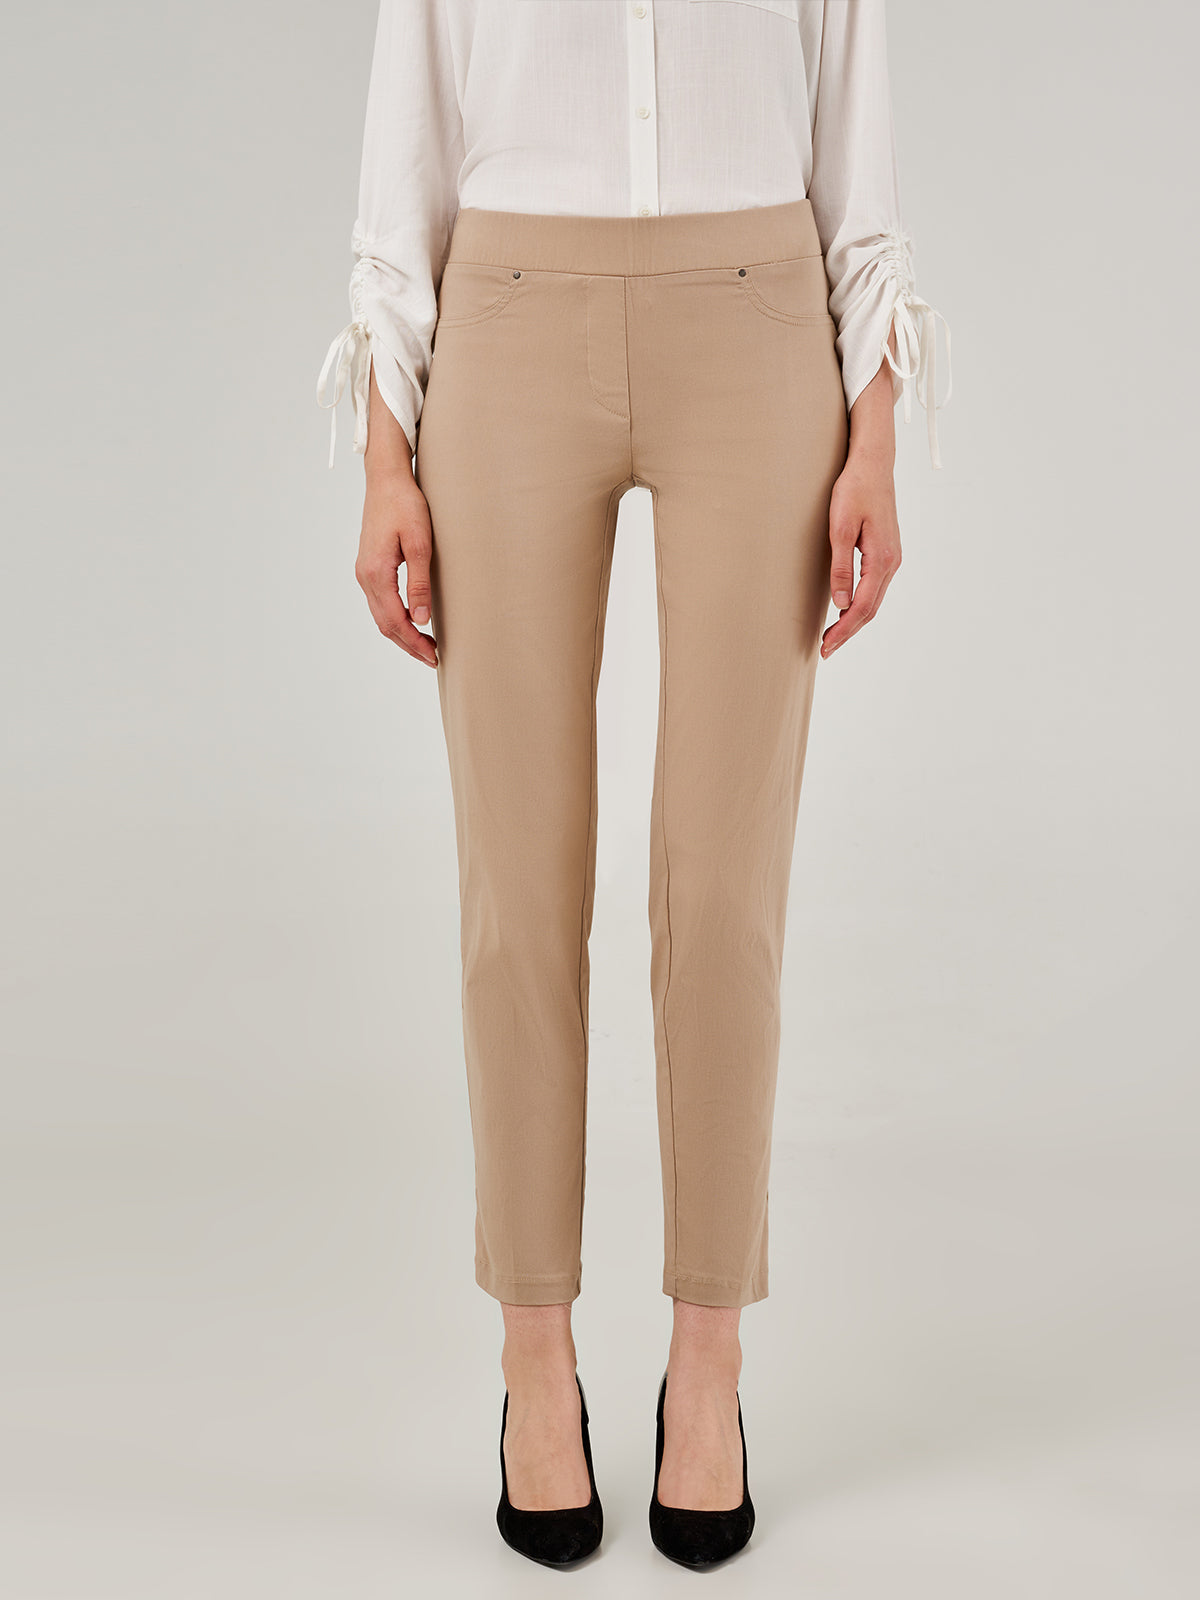 Stichting Nidos  Sonoma Women's Life+style Capri Pants Size 14